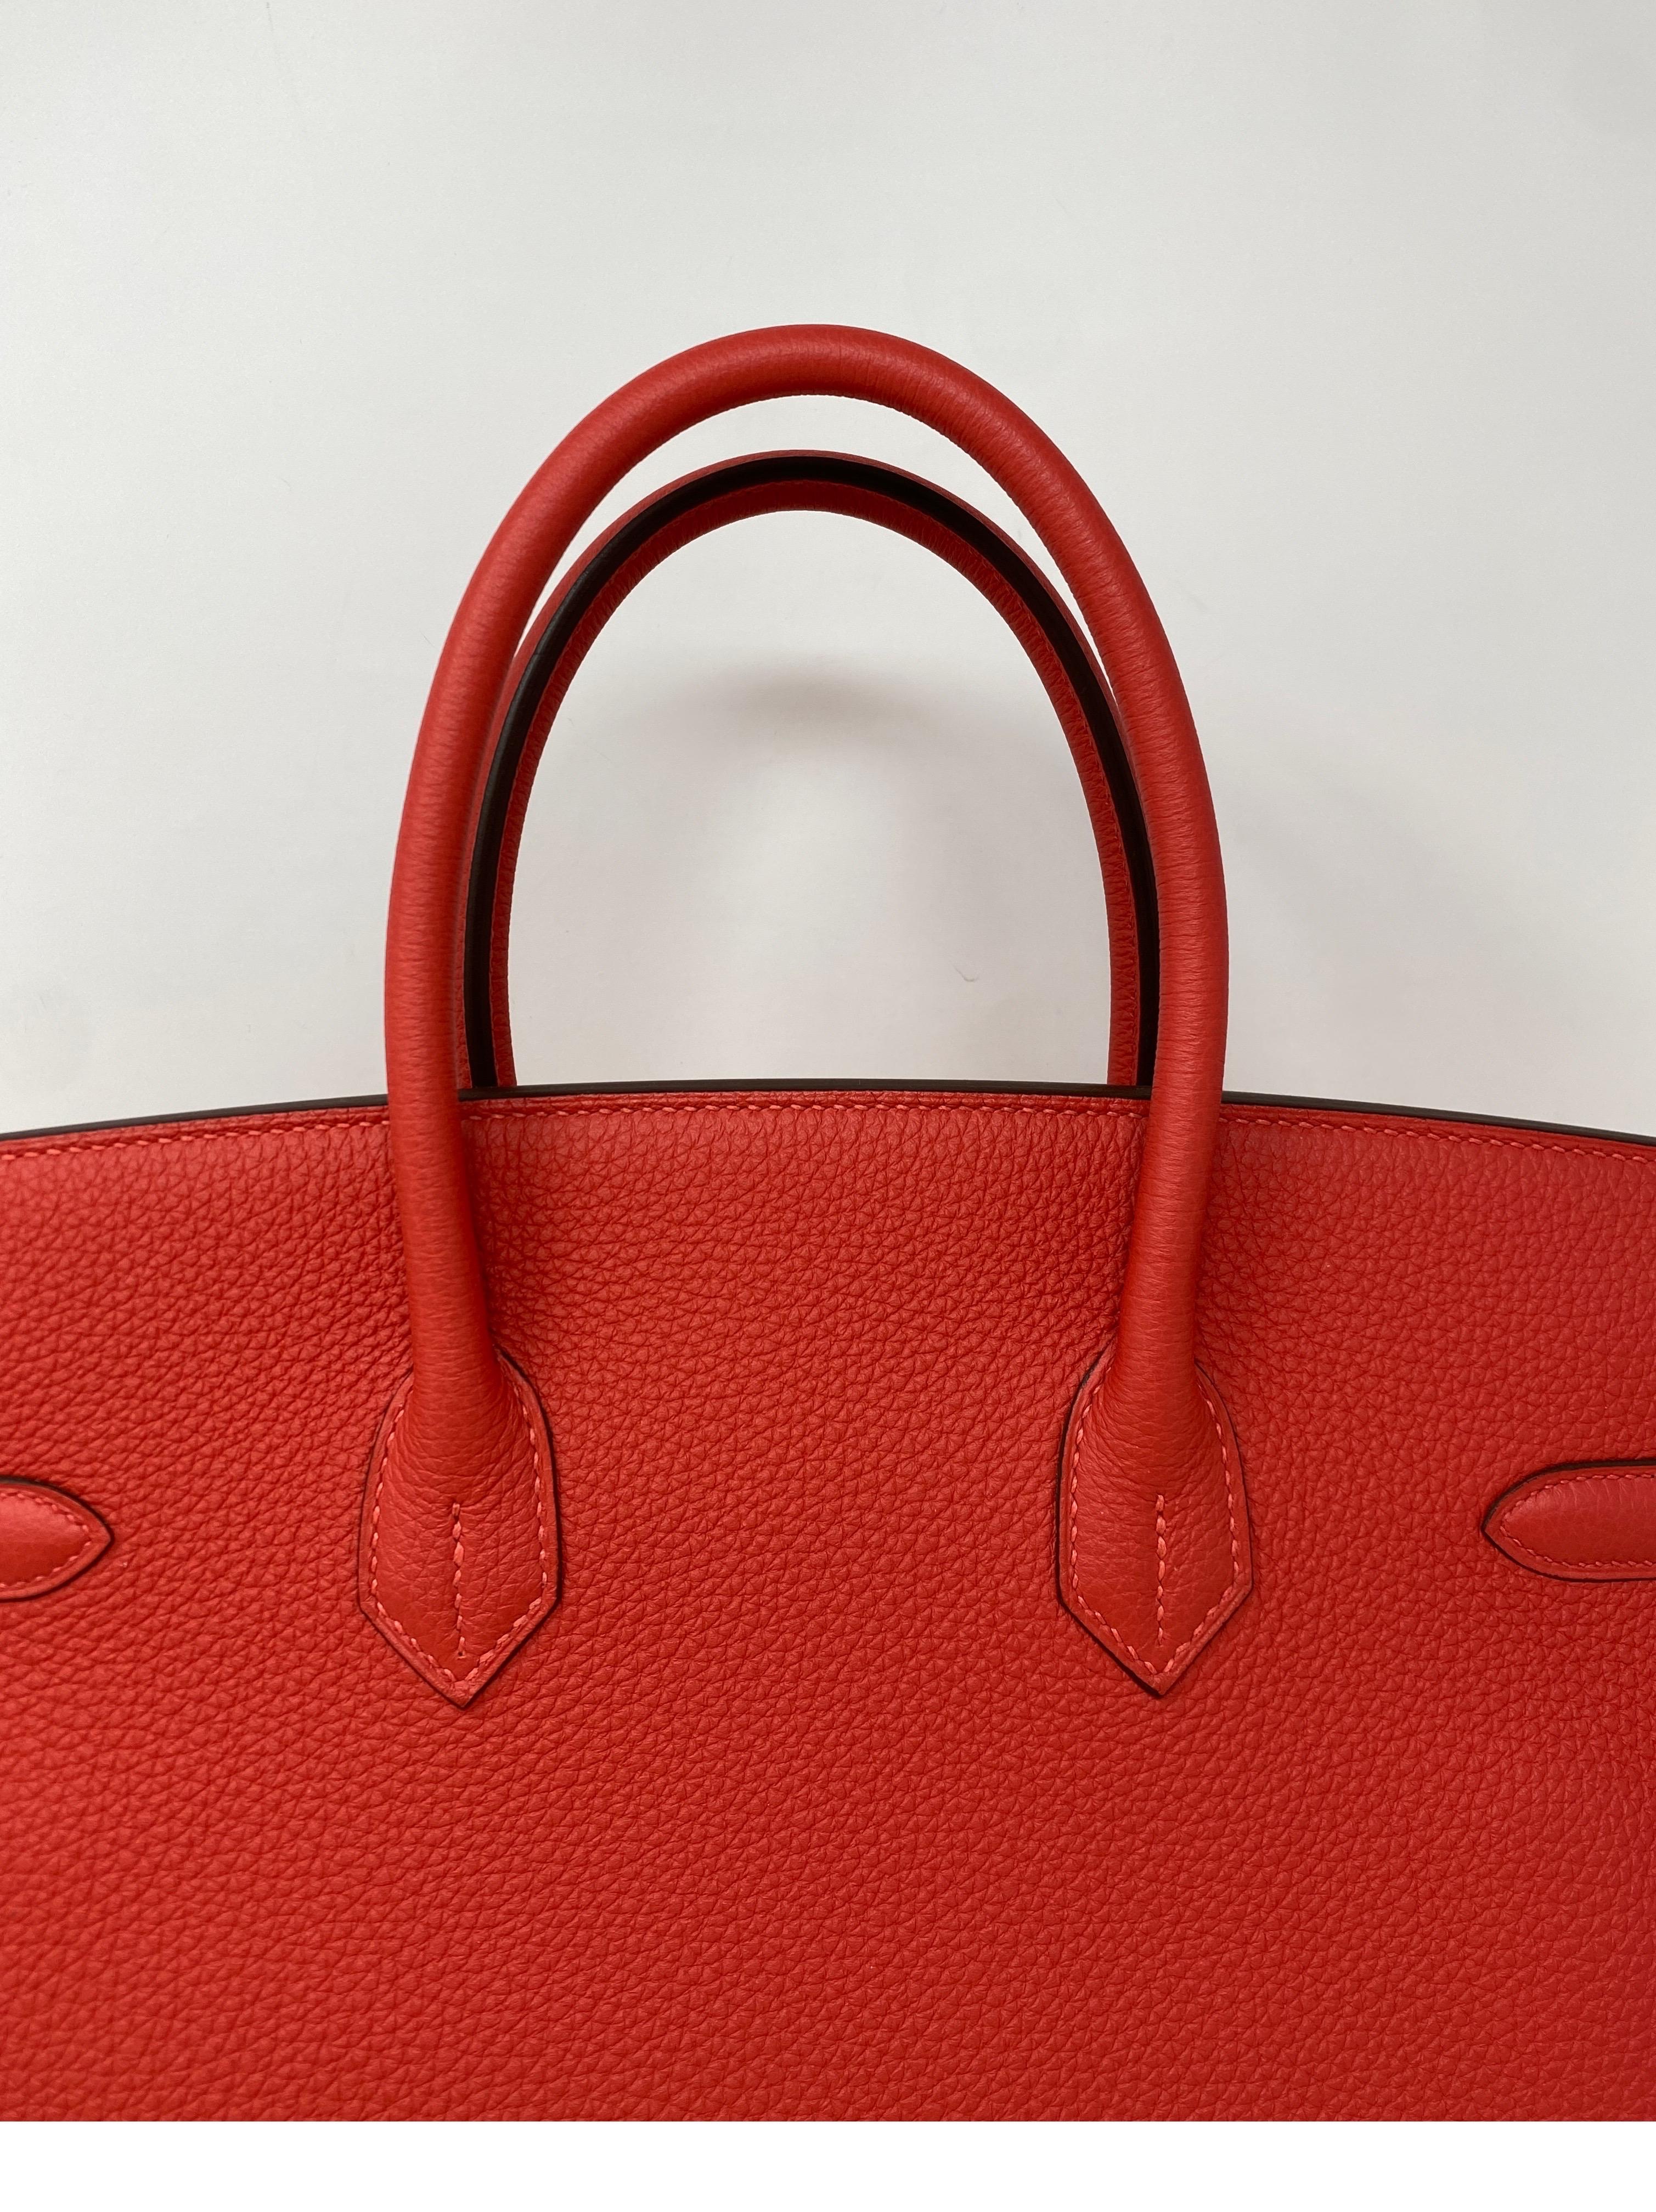 Women's or Men's Hermes Rouge Pivoine Birkin 35 Bag 